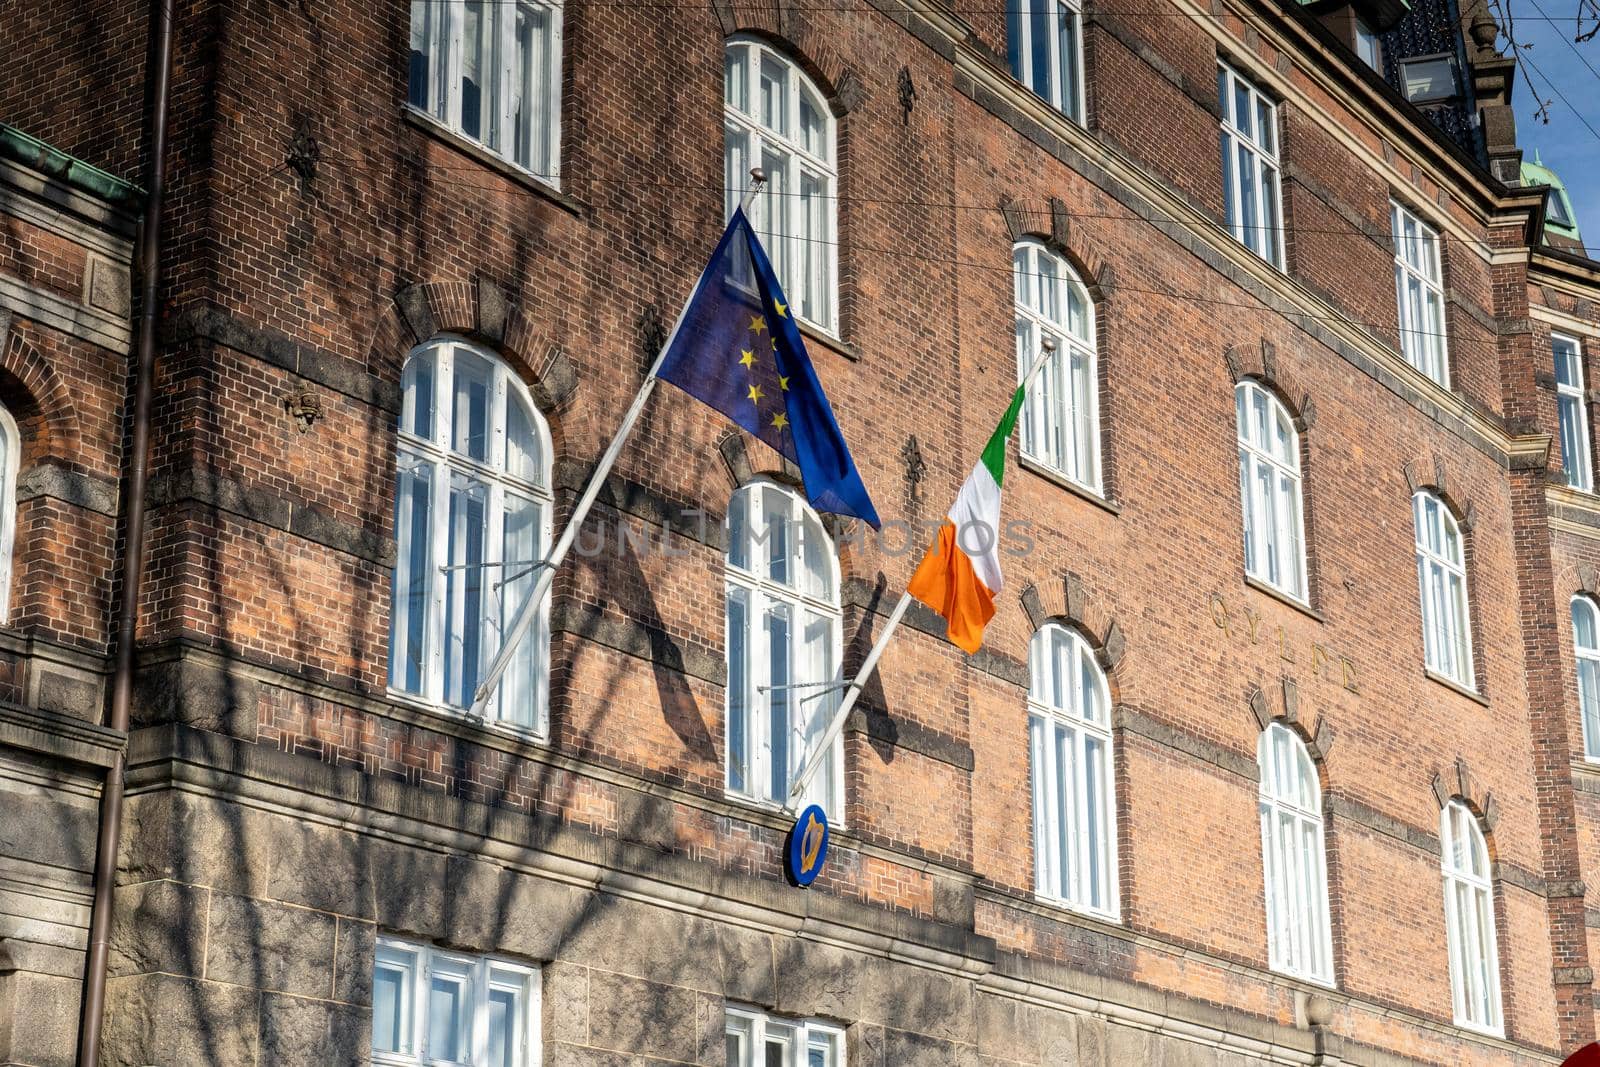 Embassy of Ireland in Copenhagen, Denmark by oliverfoerstner